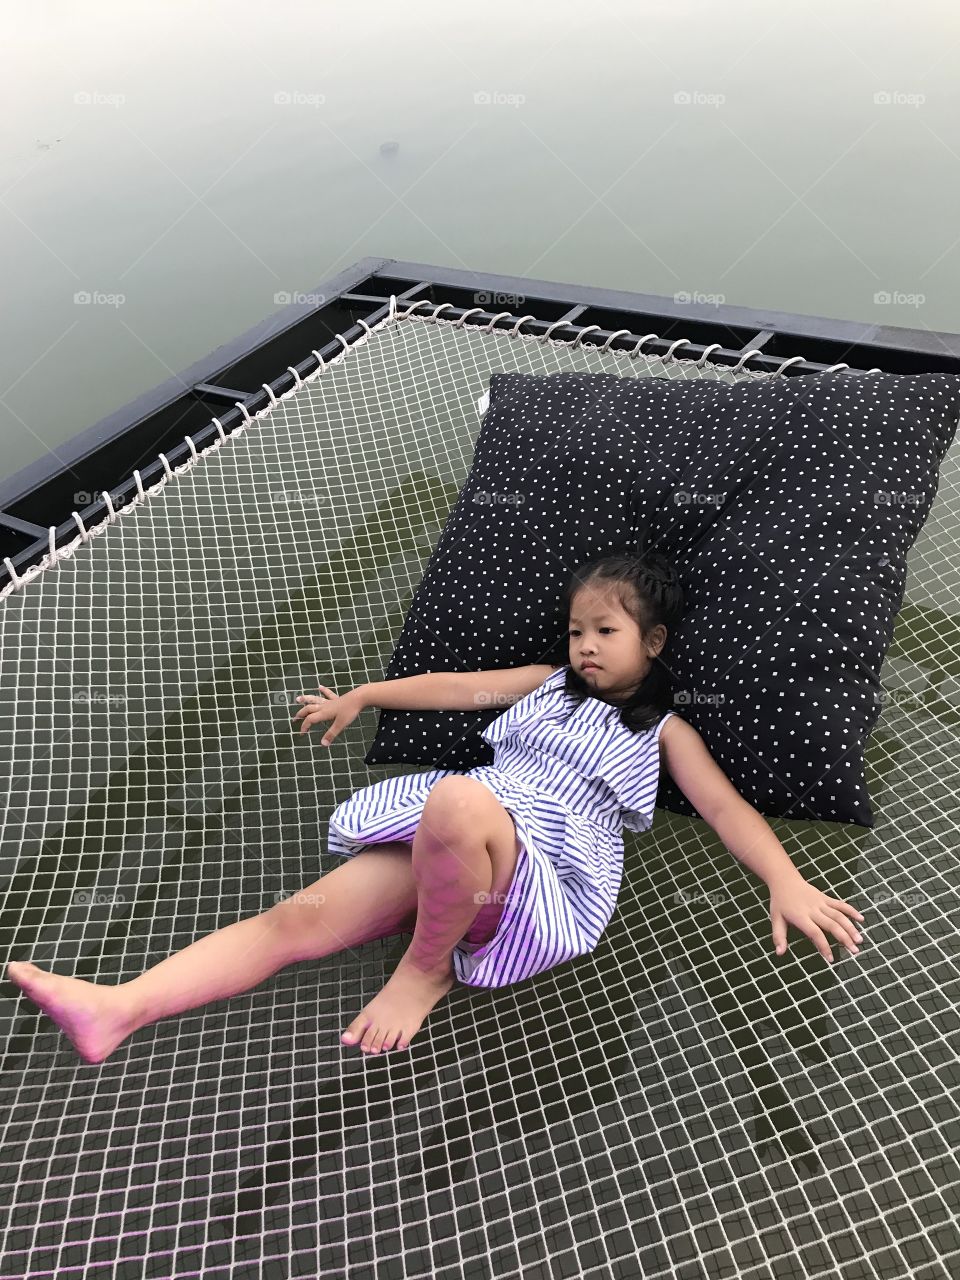 A Girl on a net